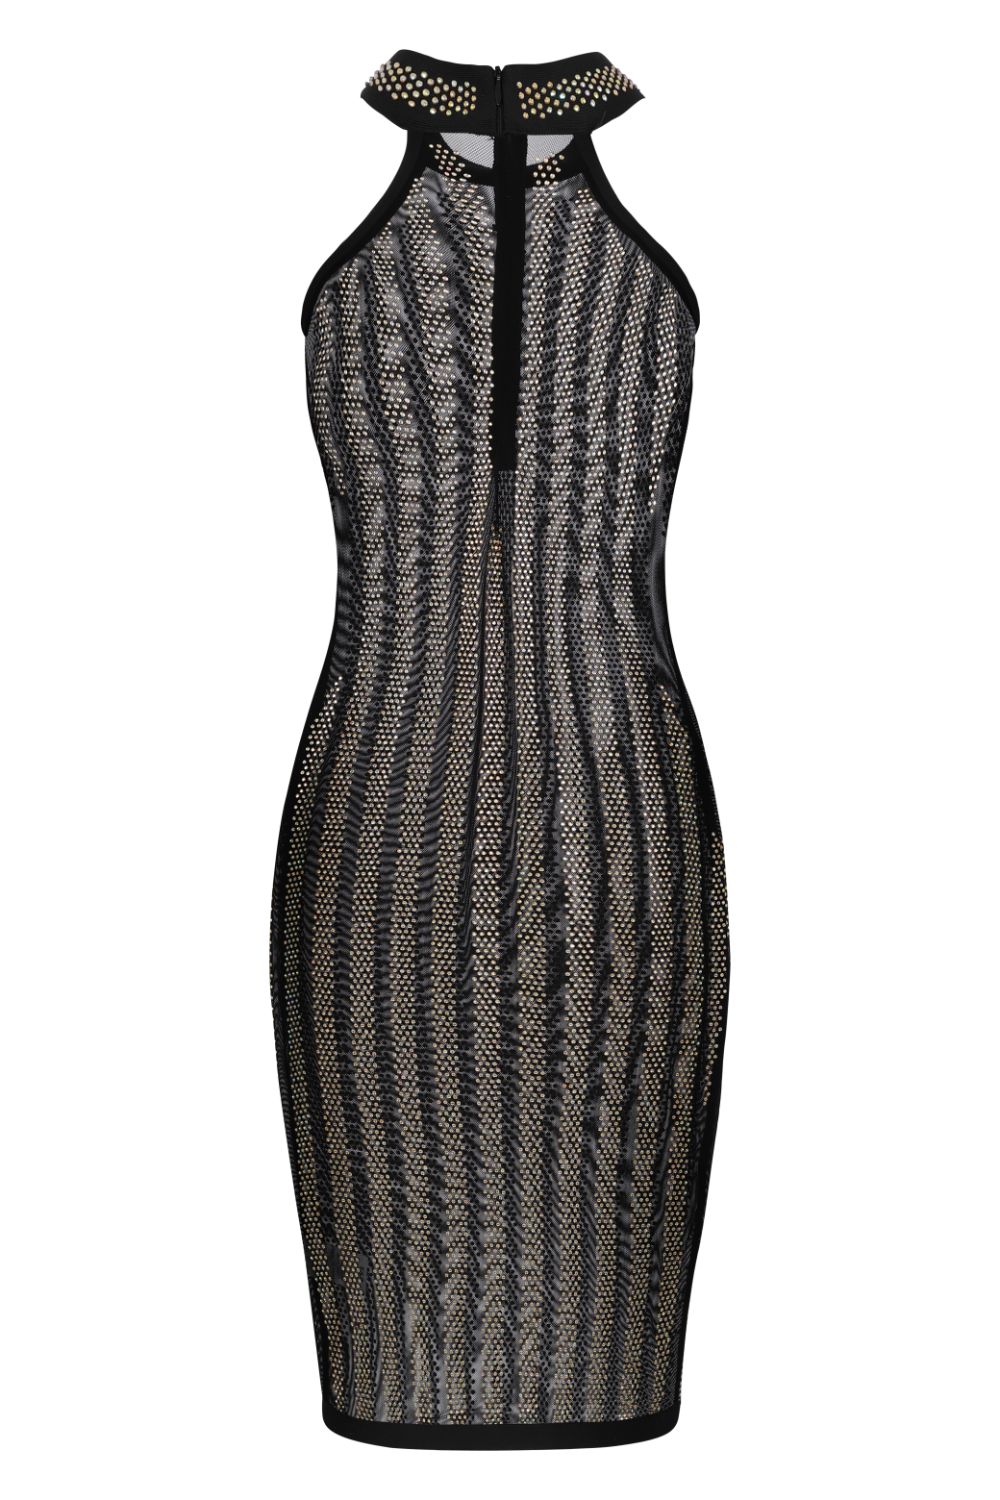 Xtra Black Crystal Iridescent Rhinestone Sheer Mesh Midi Bodycon Dress